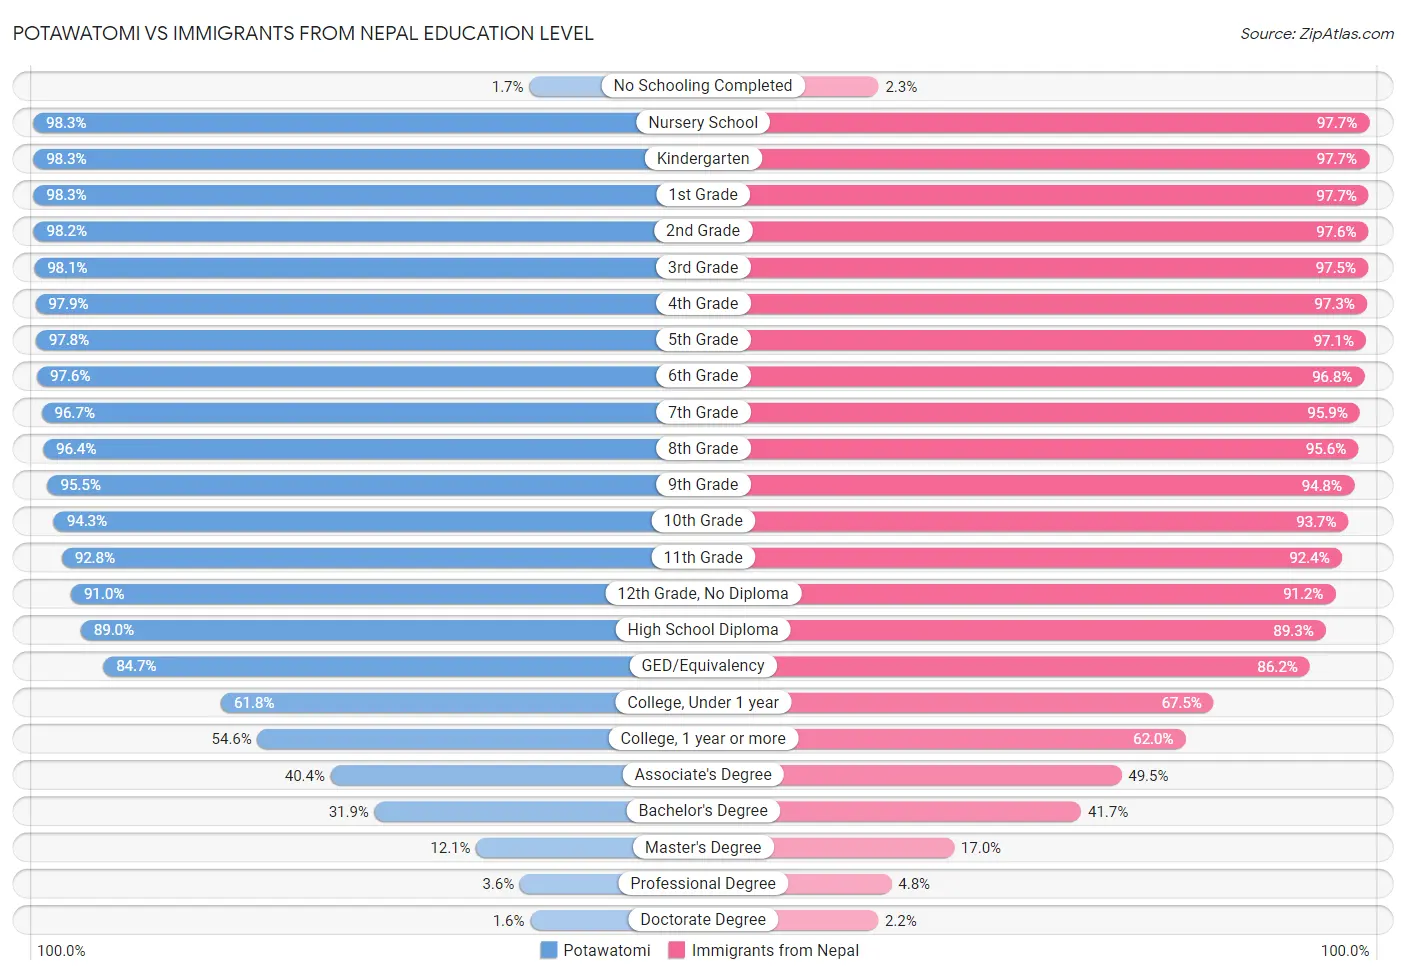 Potawatomi vs Immigrants from Nepal Education Level